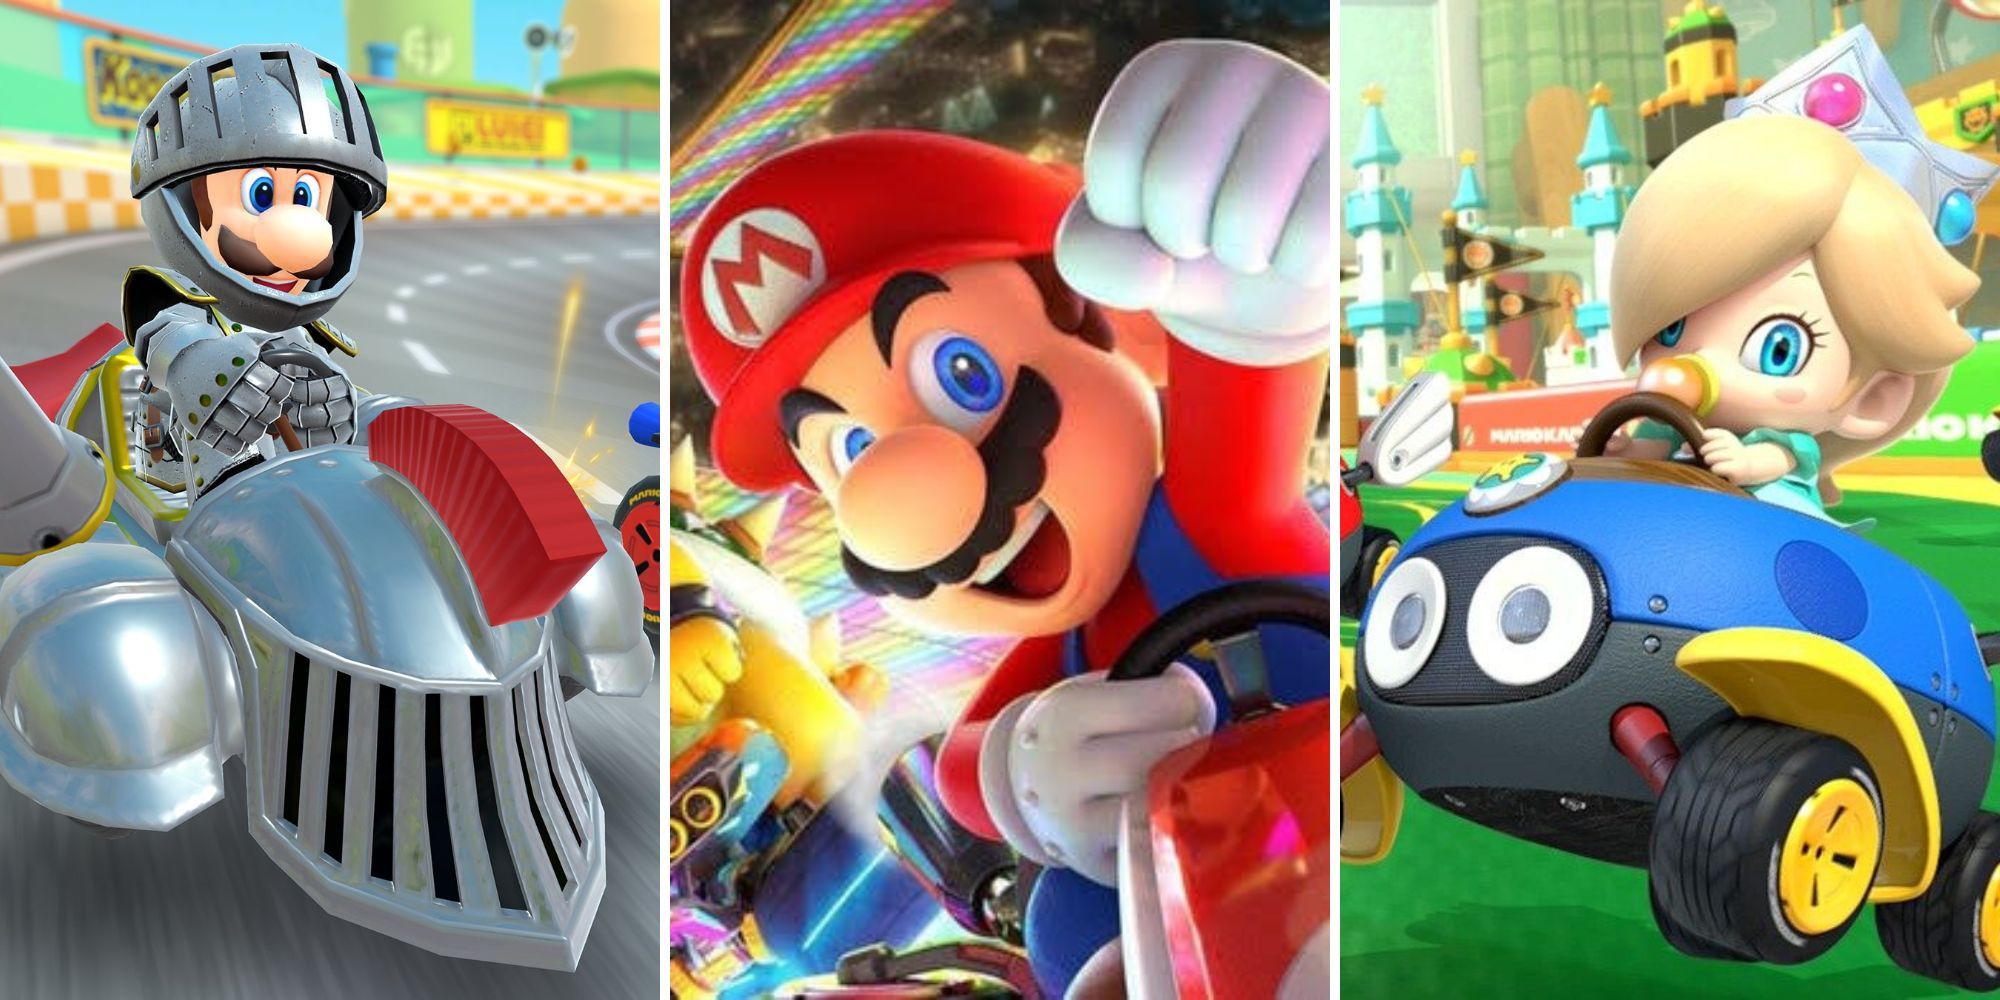 Luigi rides a vehicle dressed in armor, Mario raises his fist on Rainbow Road, Baby Rosalina drives a Biddybuggy